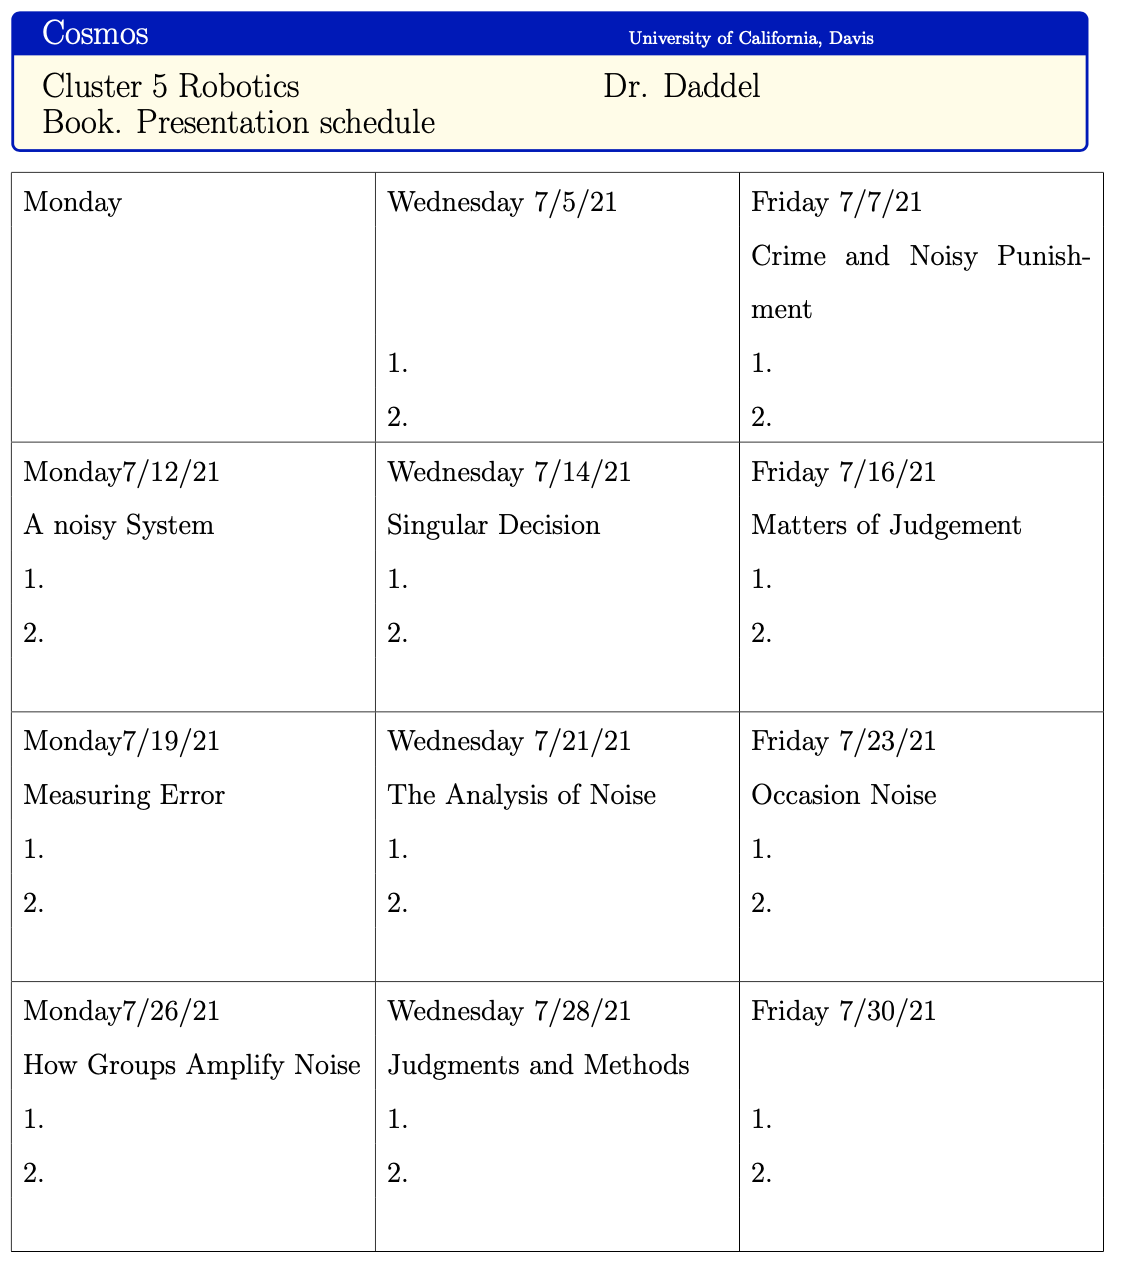 Cosmos_Book_Presentation_Schhedule.PNG